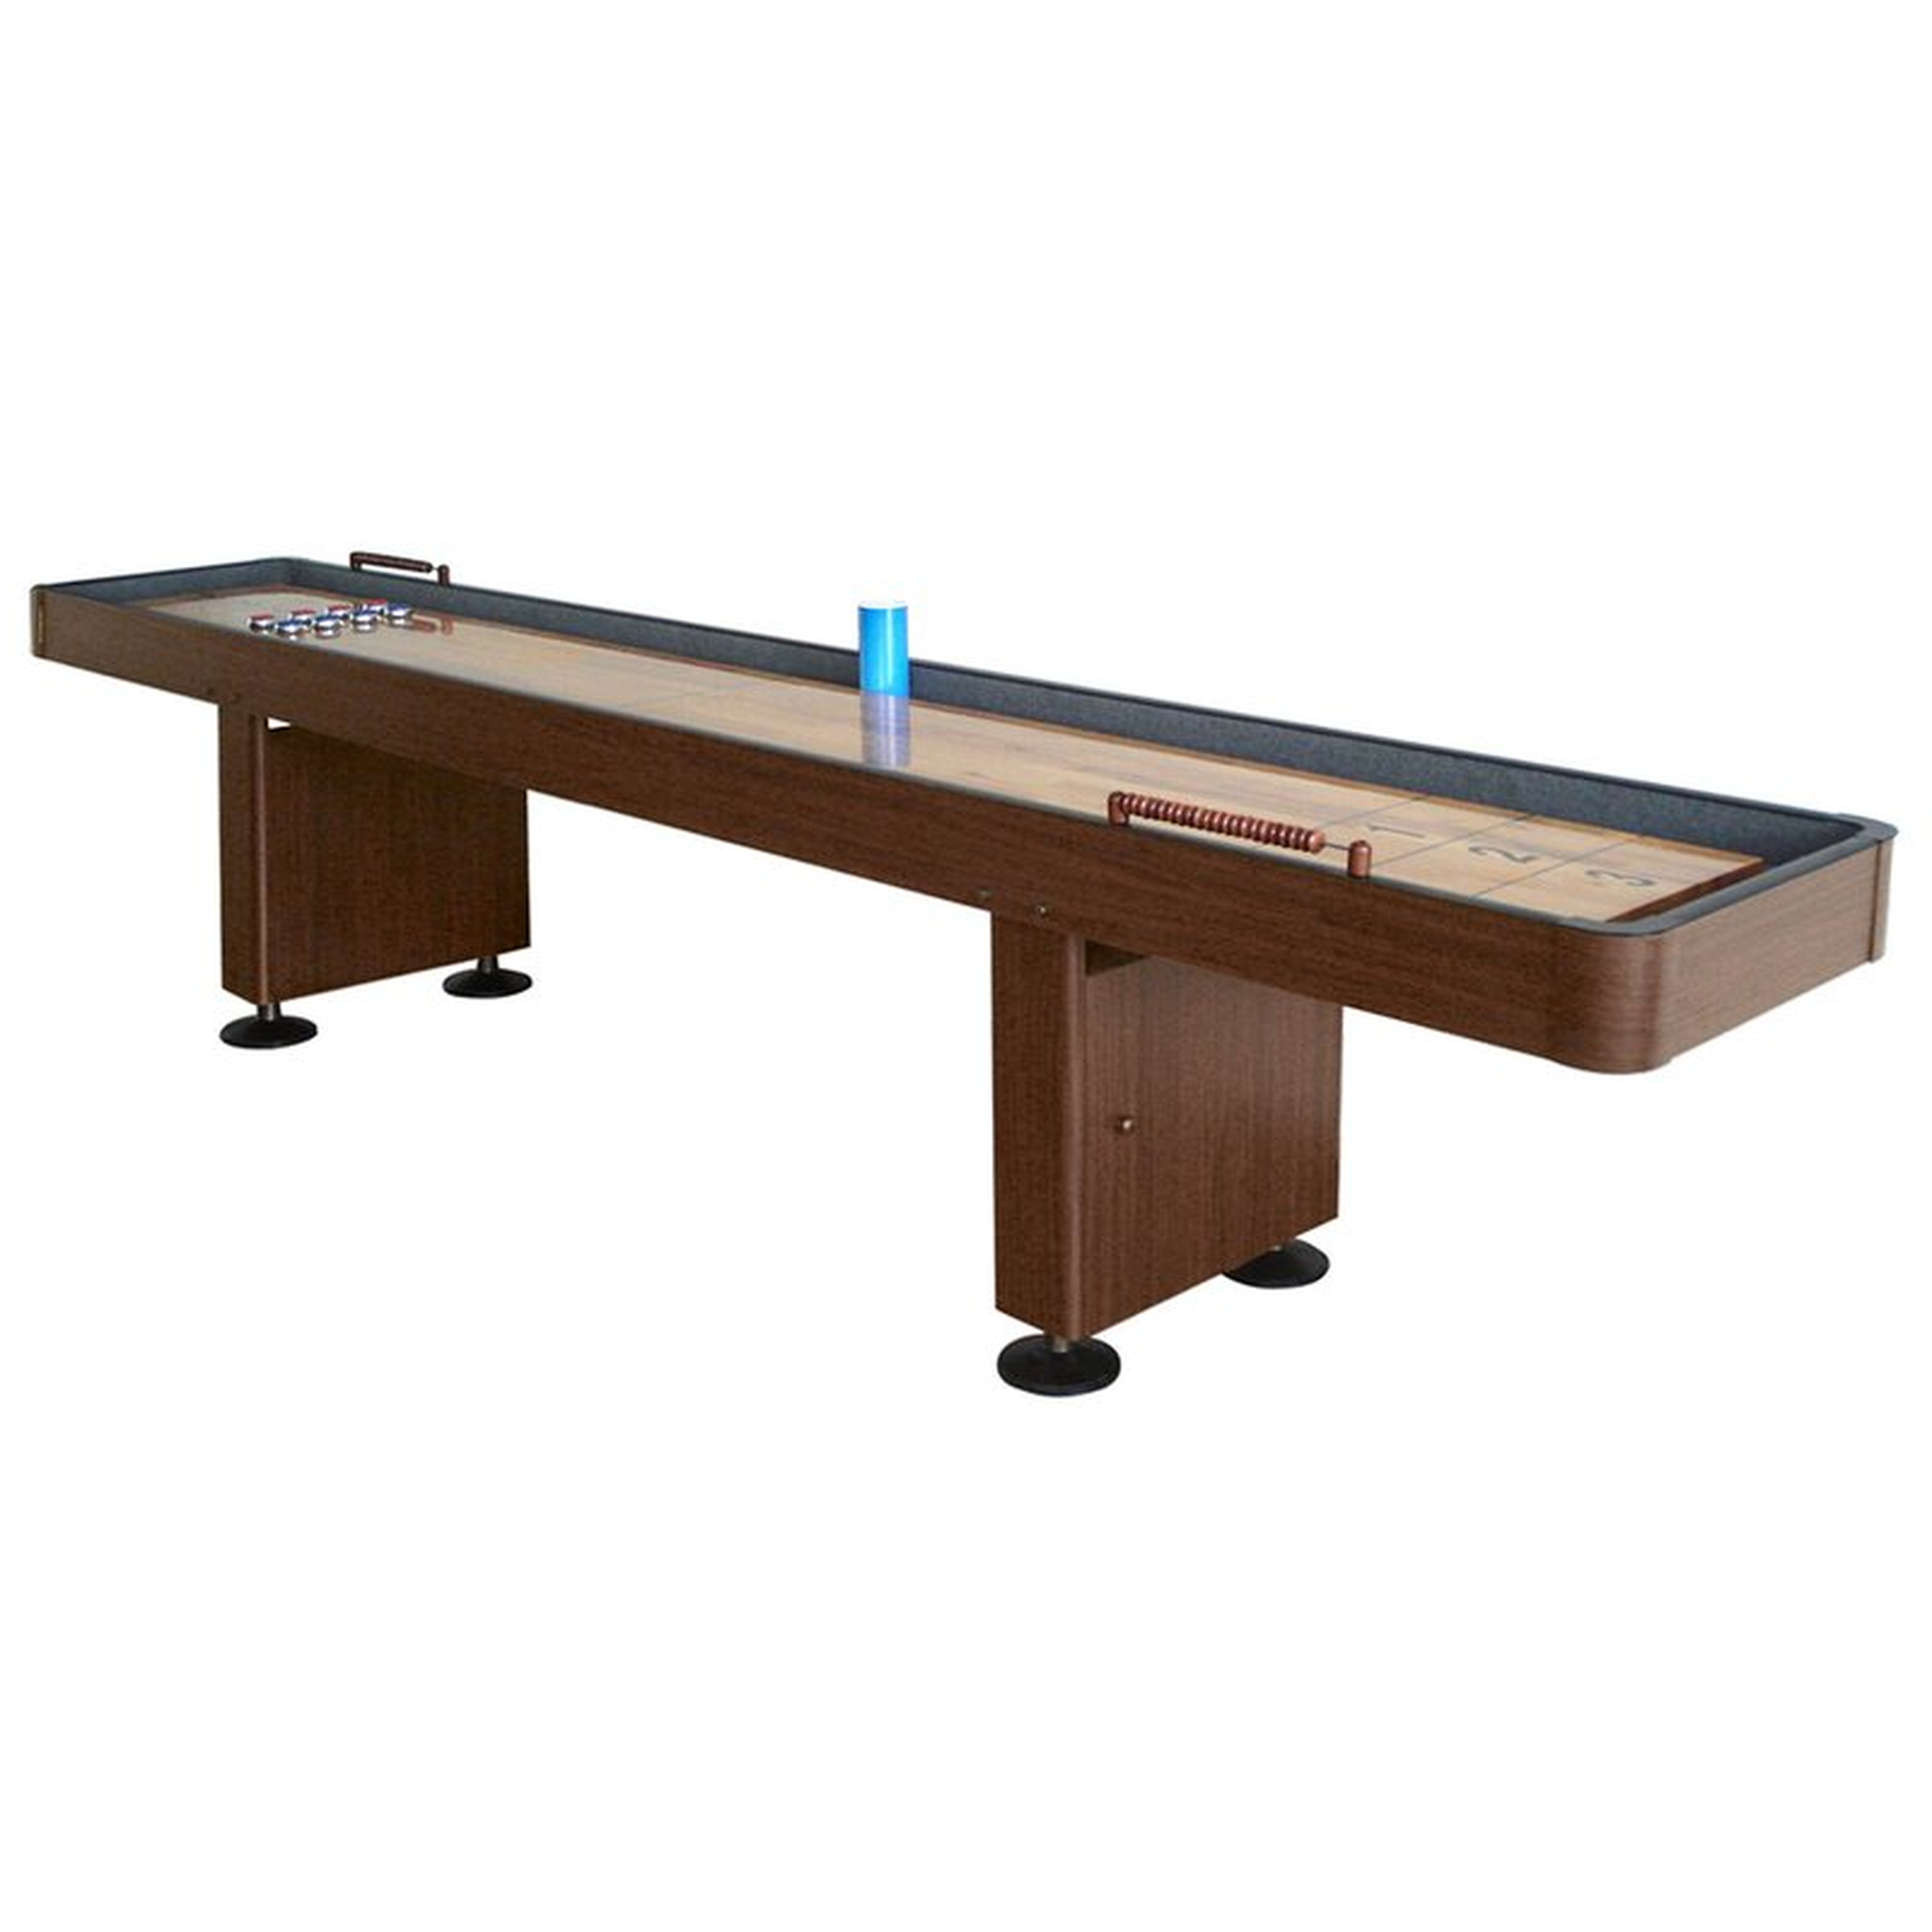 Challenger 12 ft. Shuffleboard Table w Walnut Finish, Hardwood Playfield, Storage Cabinets - Wayfair